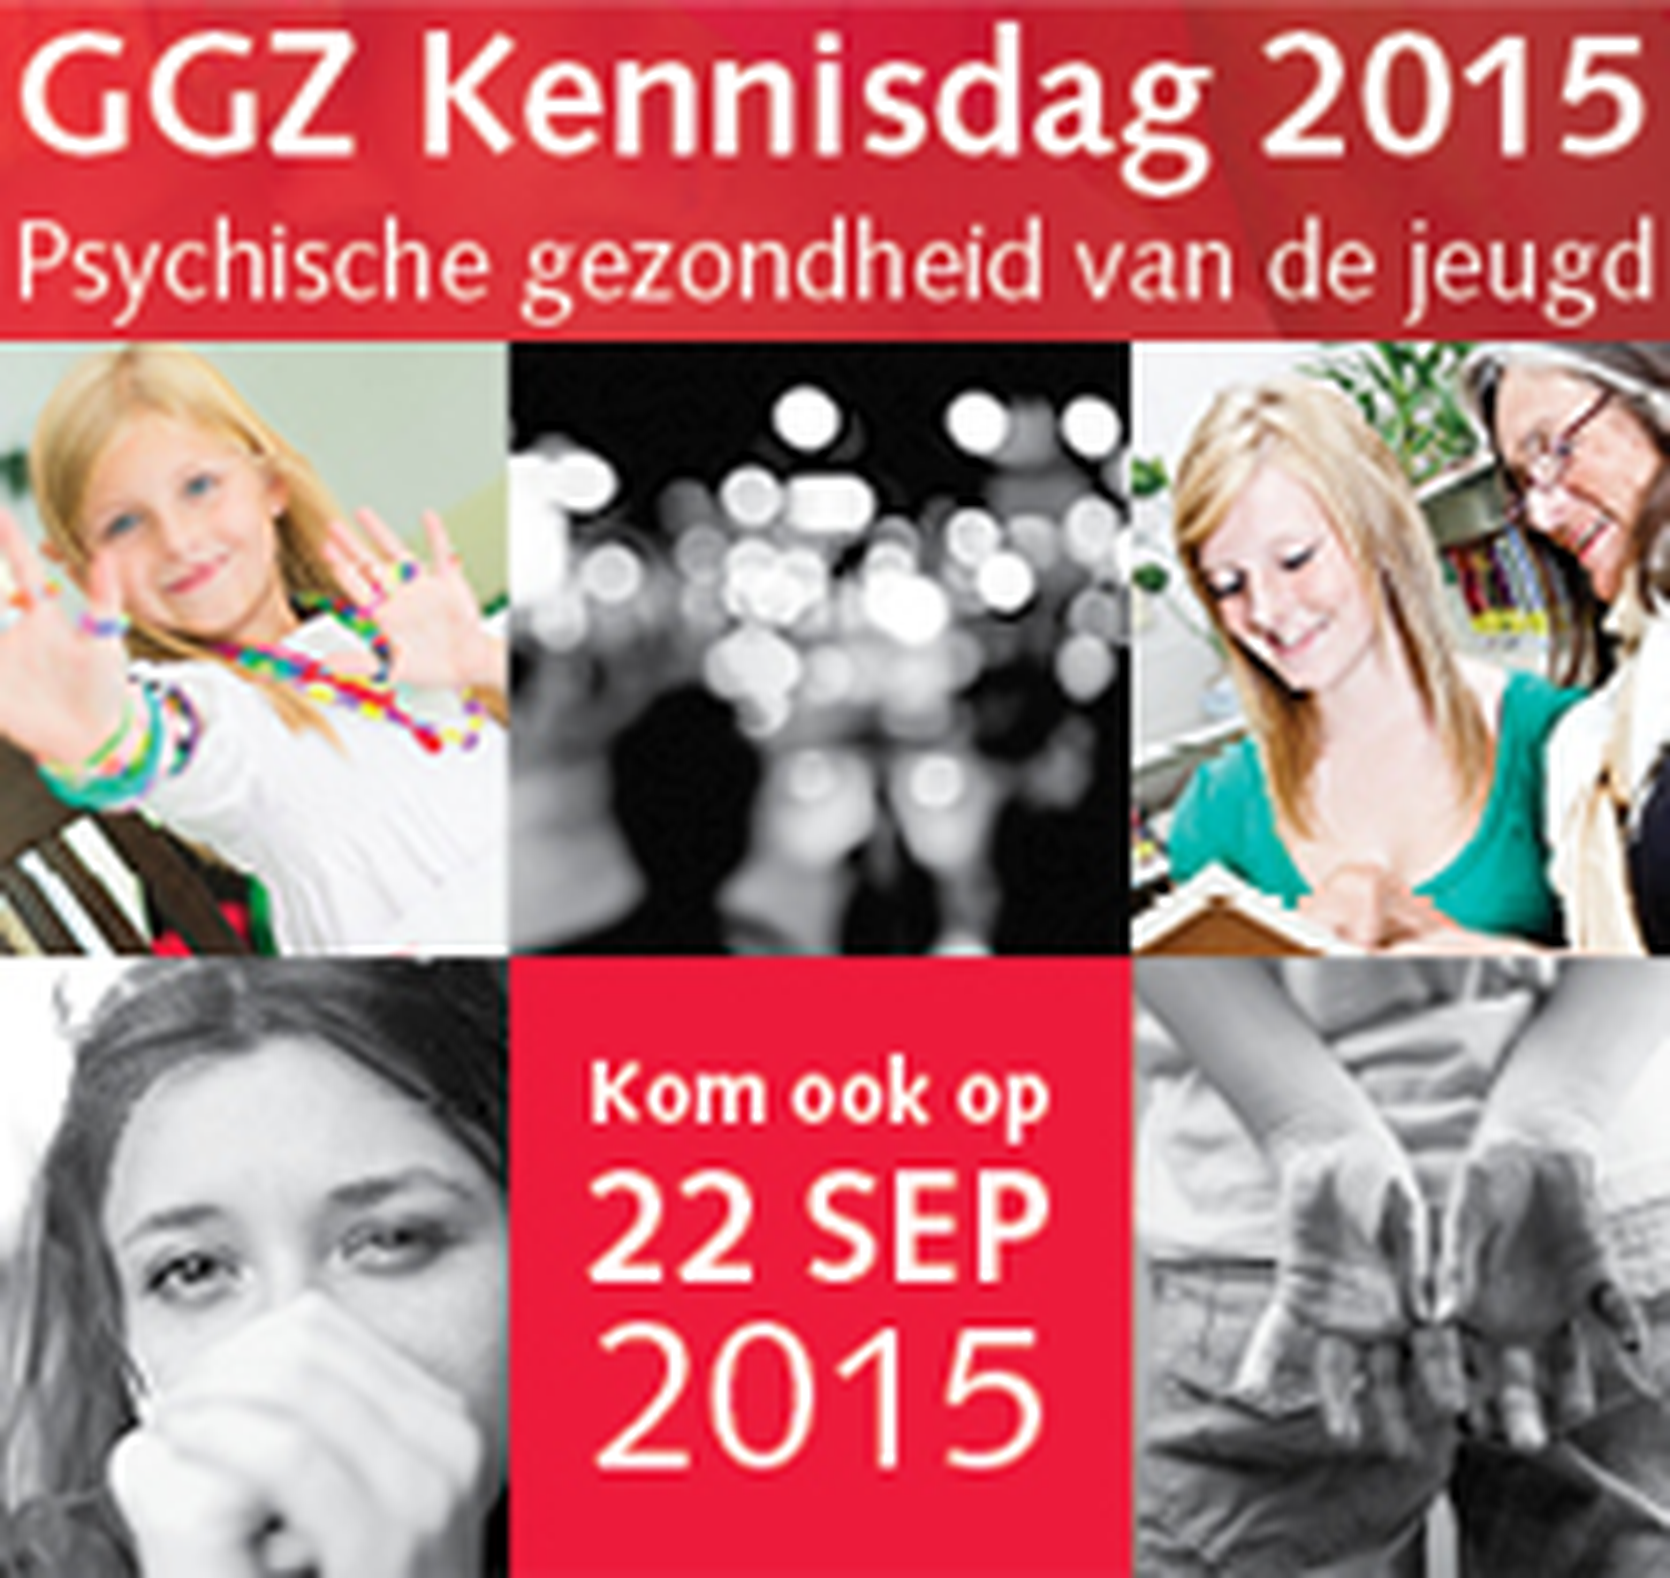 Programma GGZ Kennisdag 2015 gereed